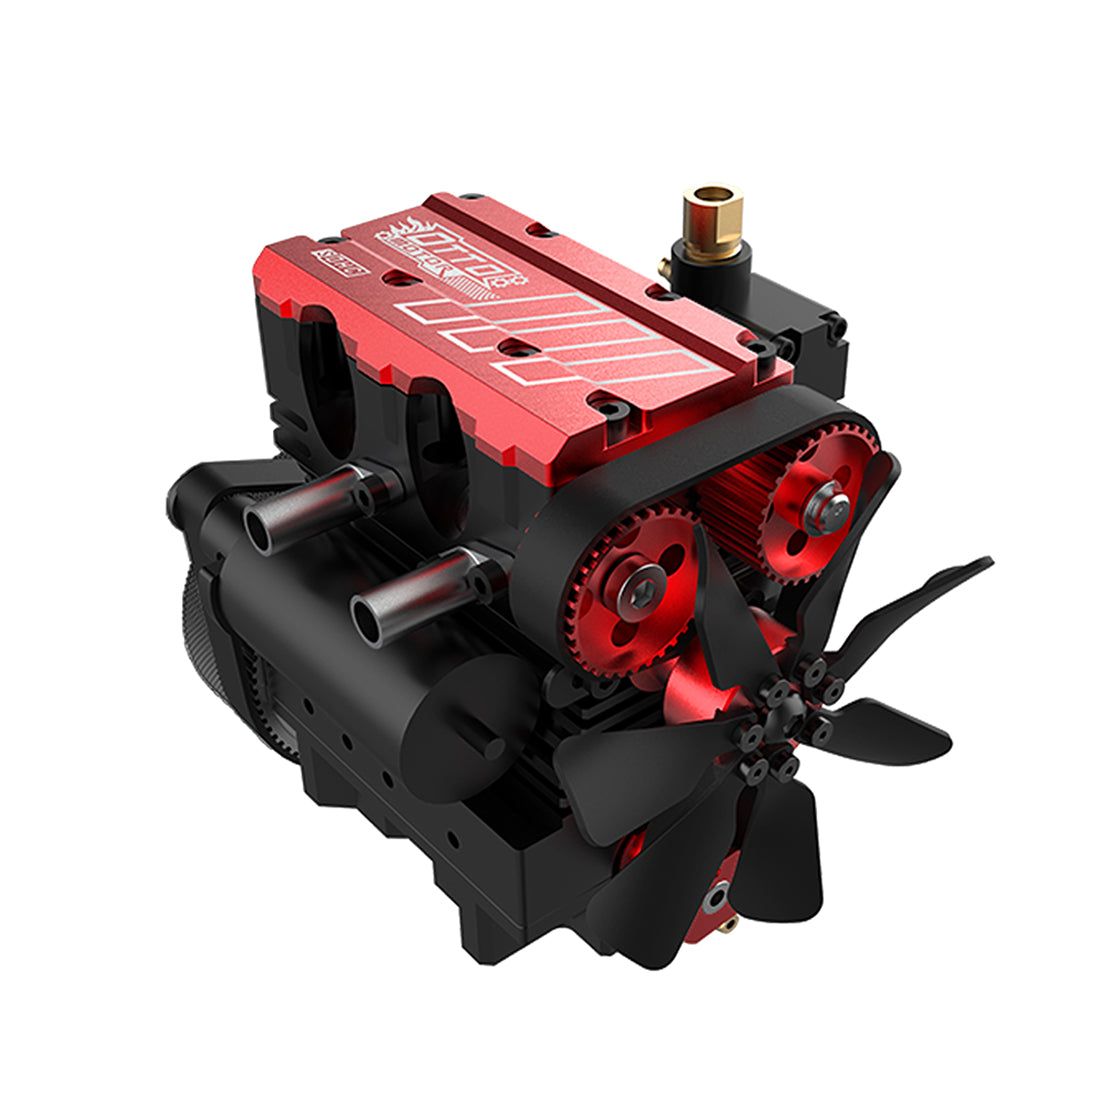 SEMTO ENGINE ST-NF2 DIY Build a Nitro 4 Stroke 2 Cylinder Engine Kit That Runs- FS-L200AC